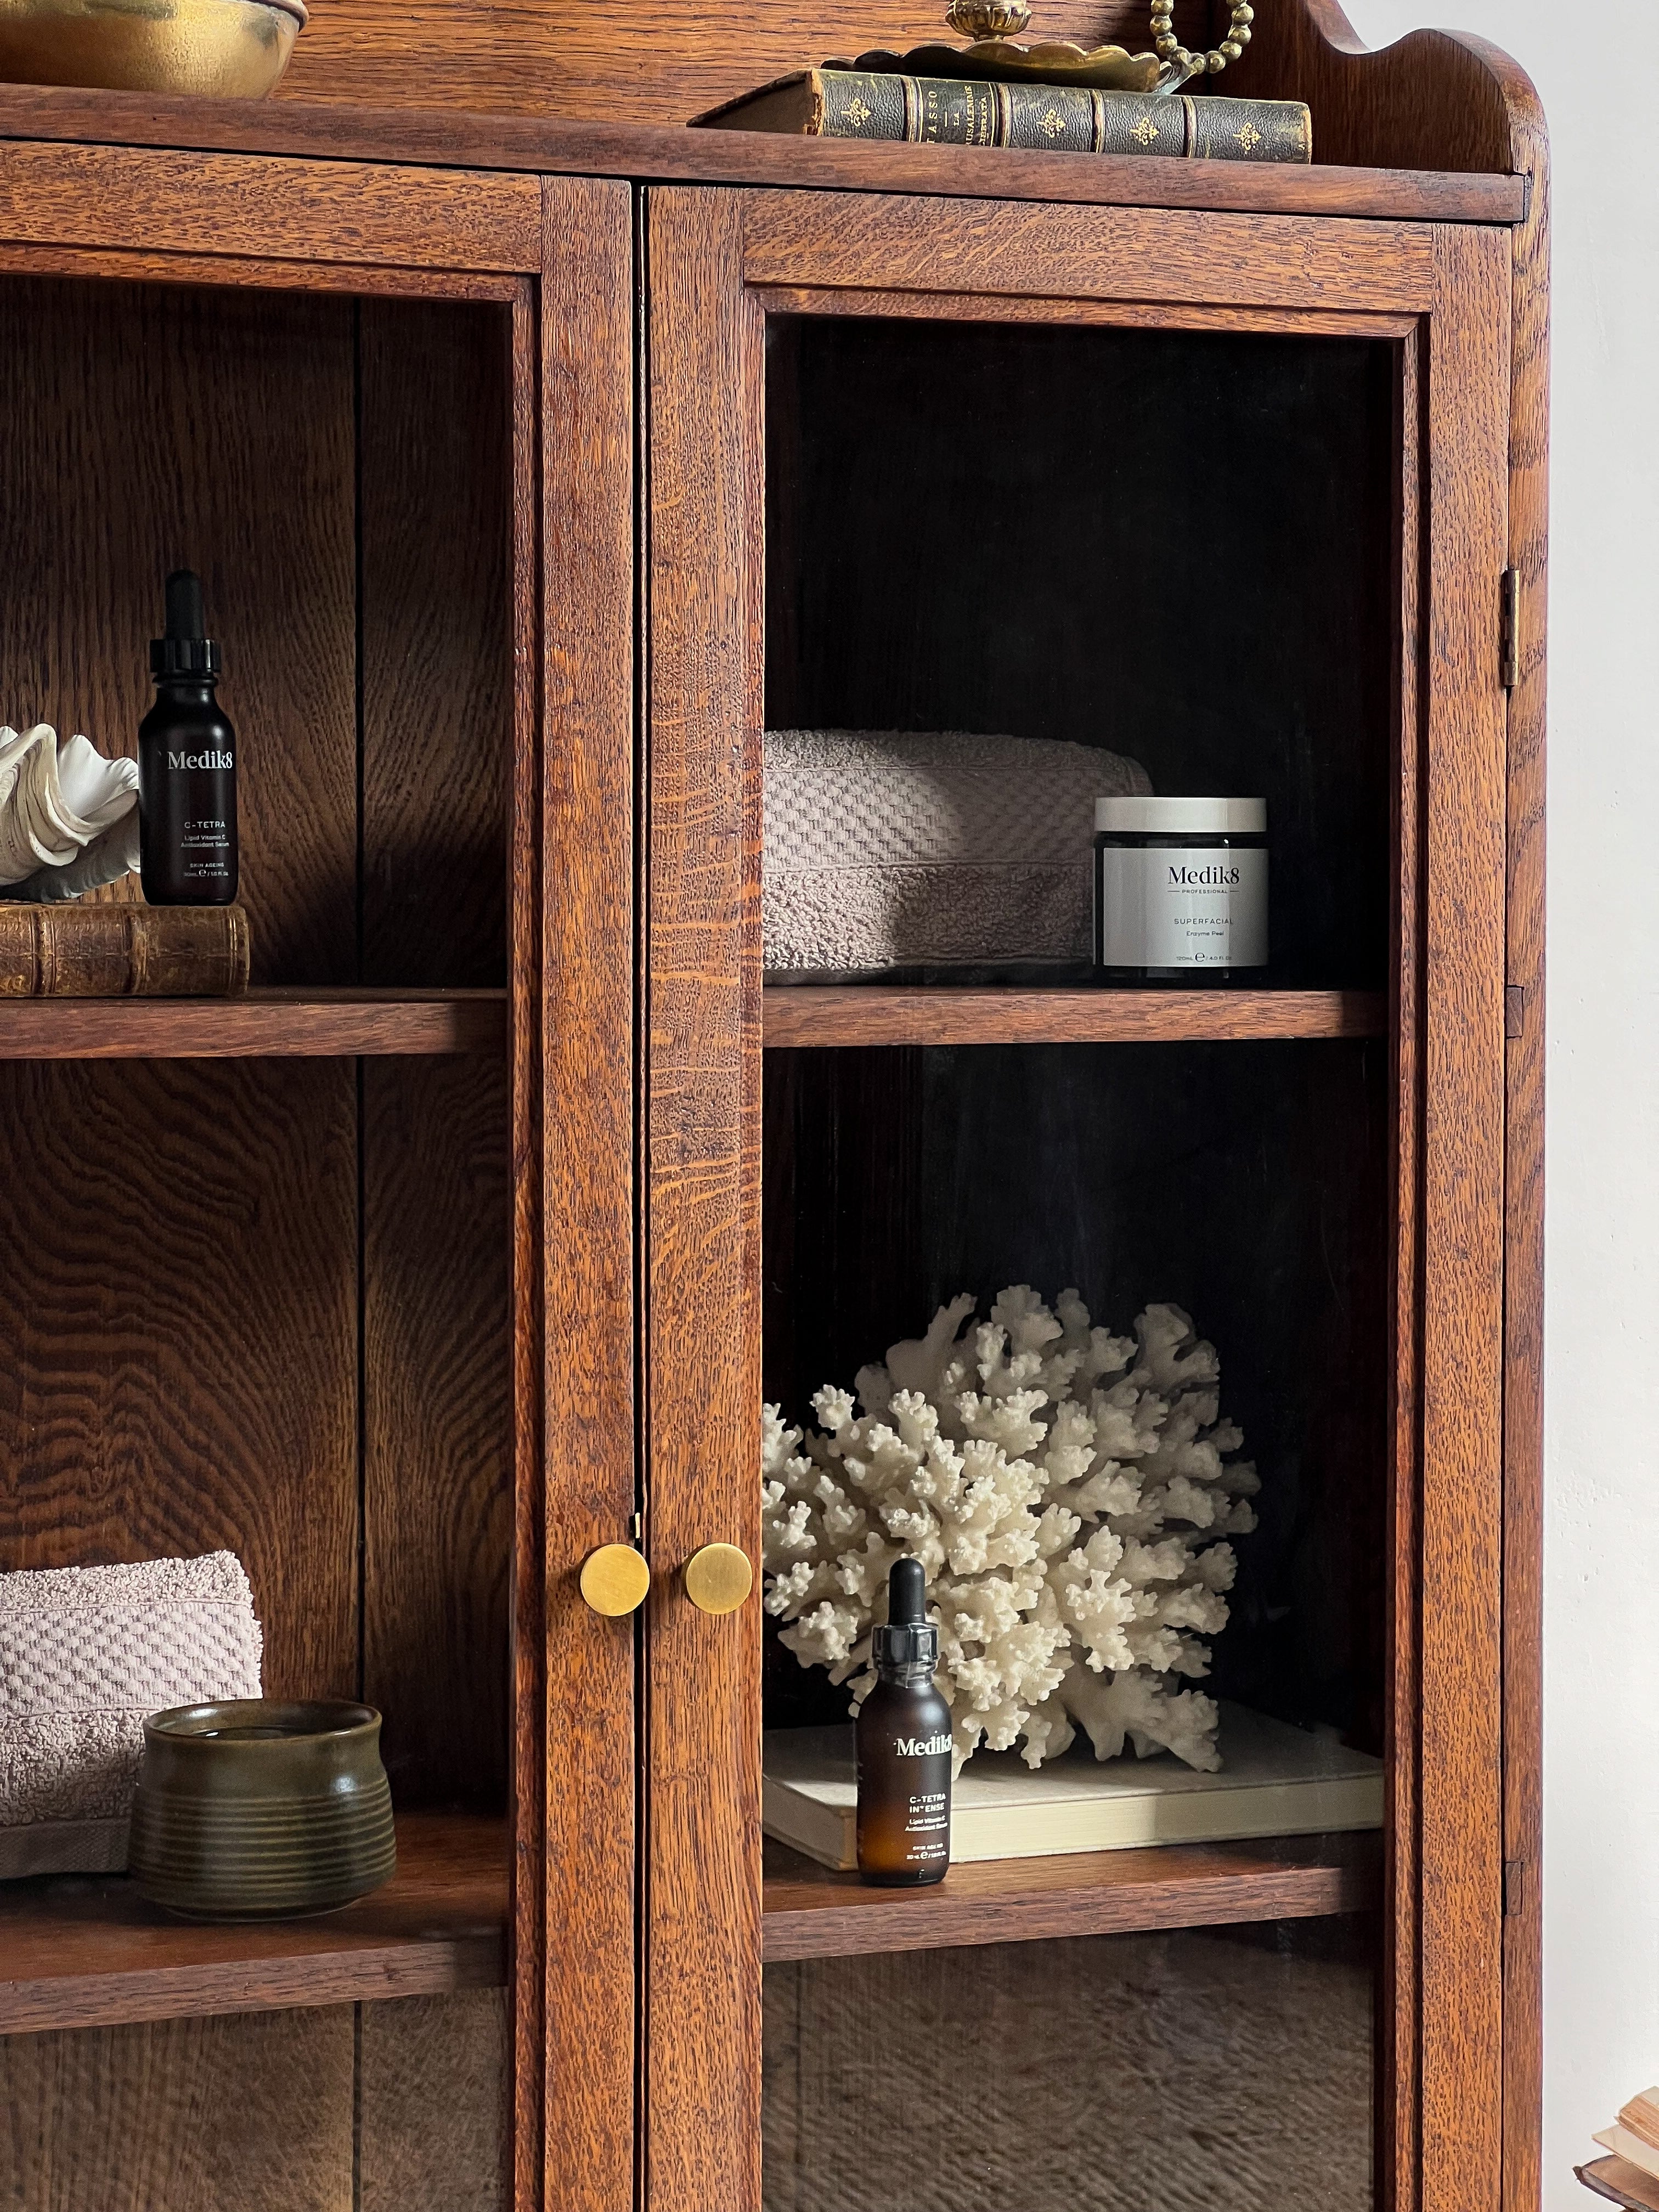 Antique Brown Oak & Glass Cabinet